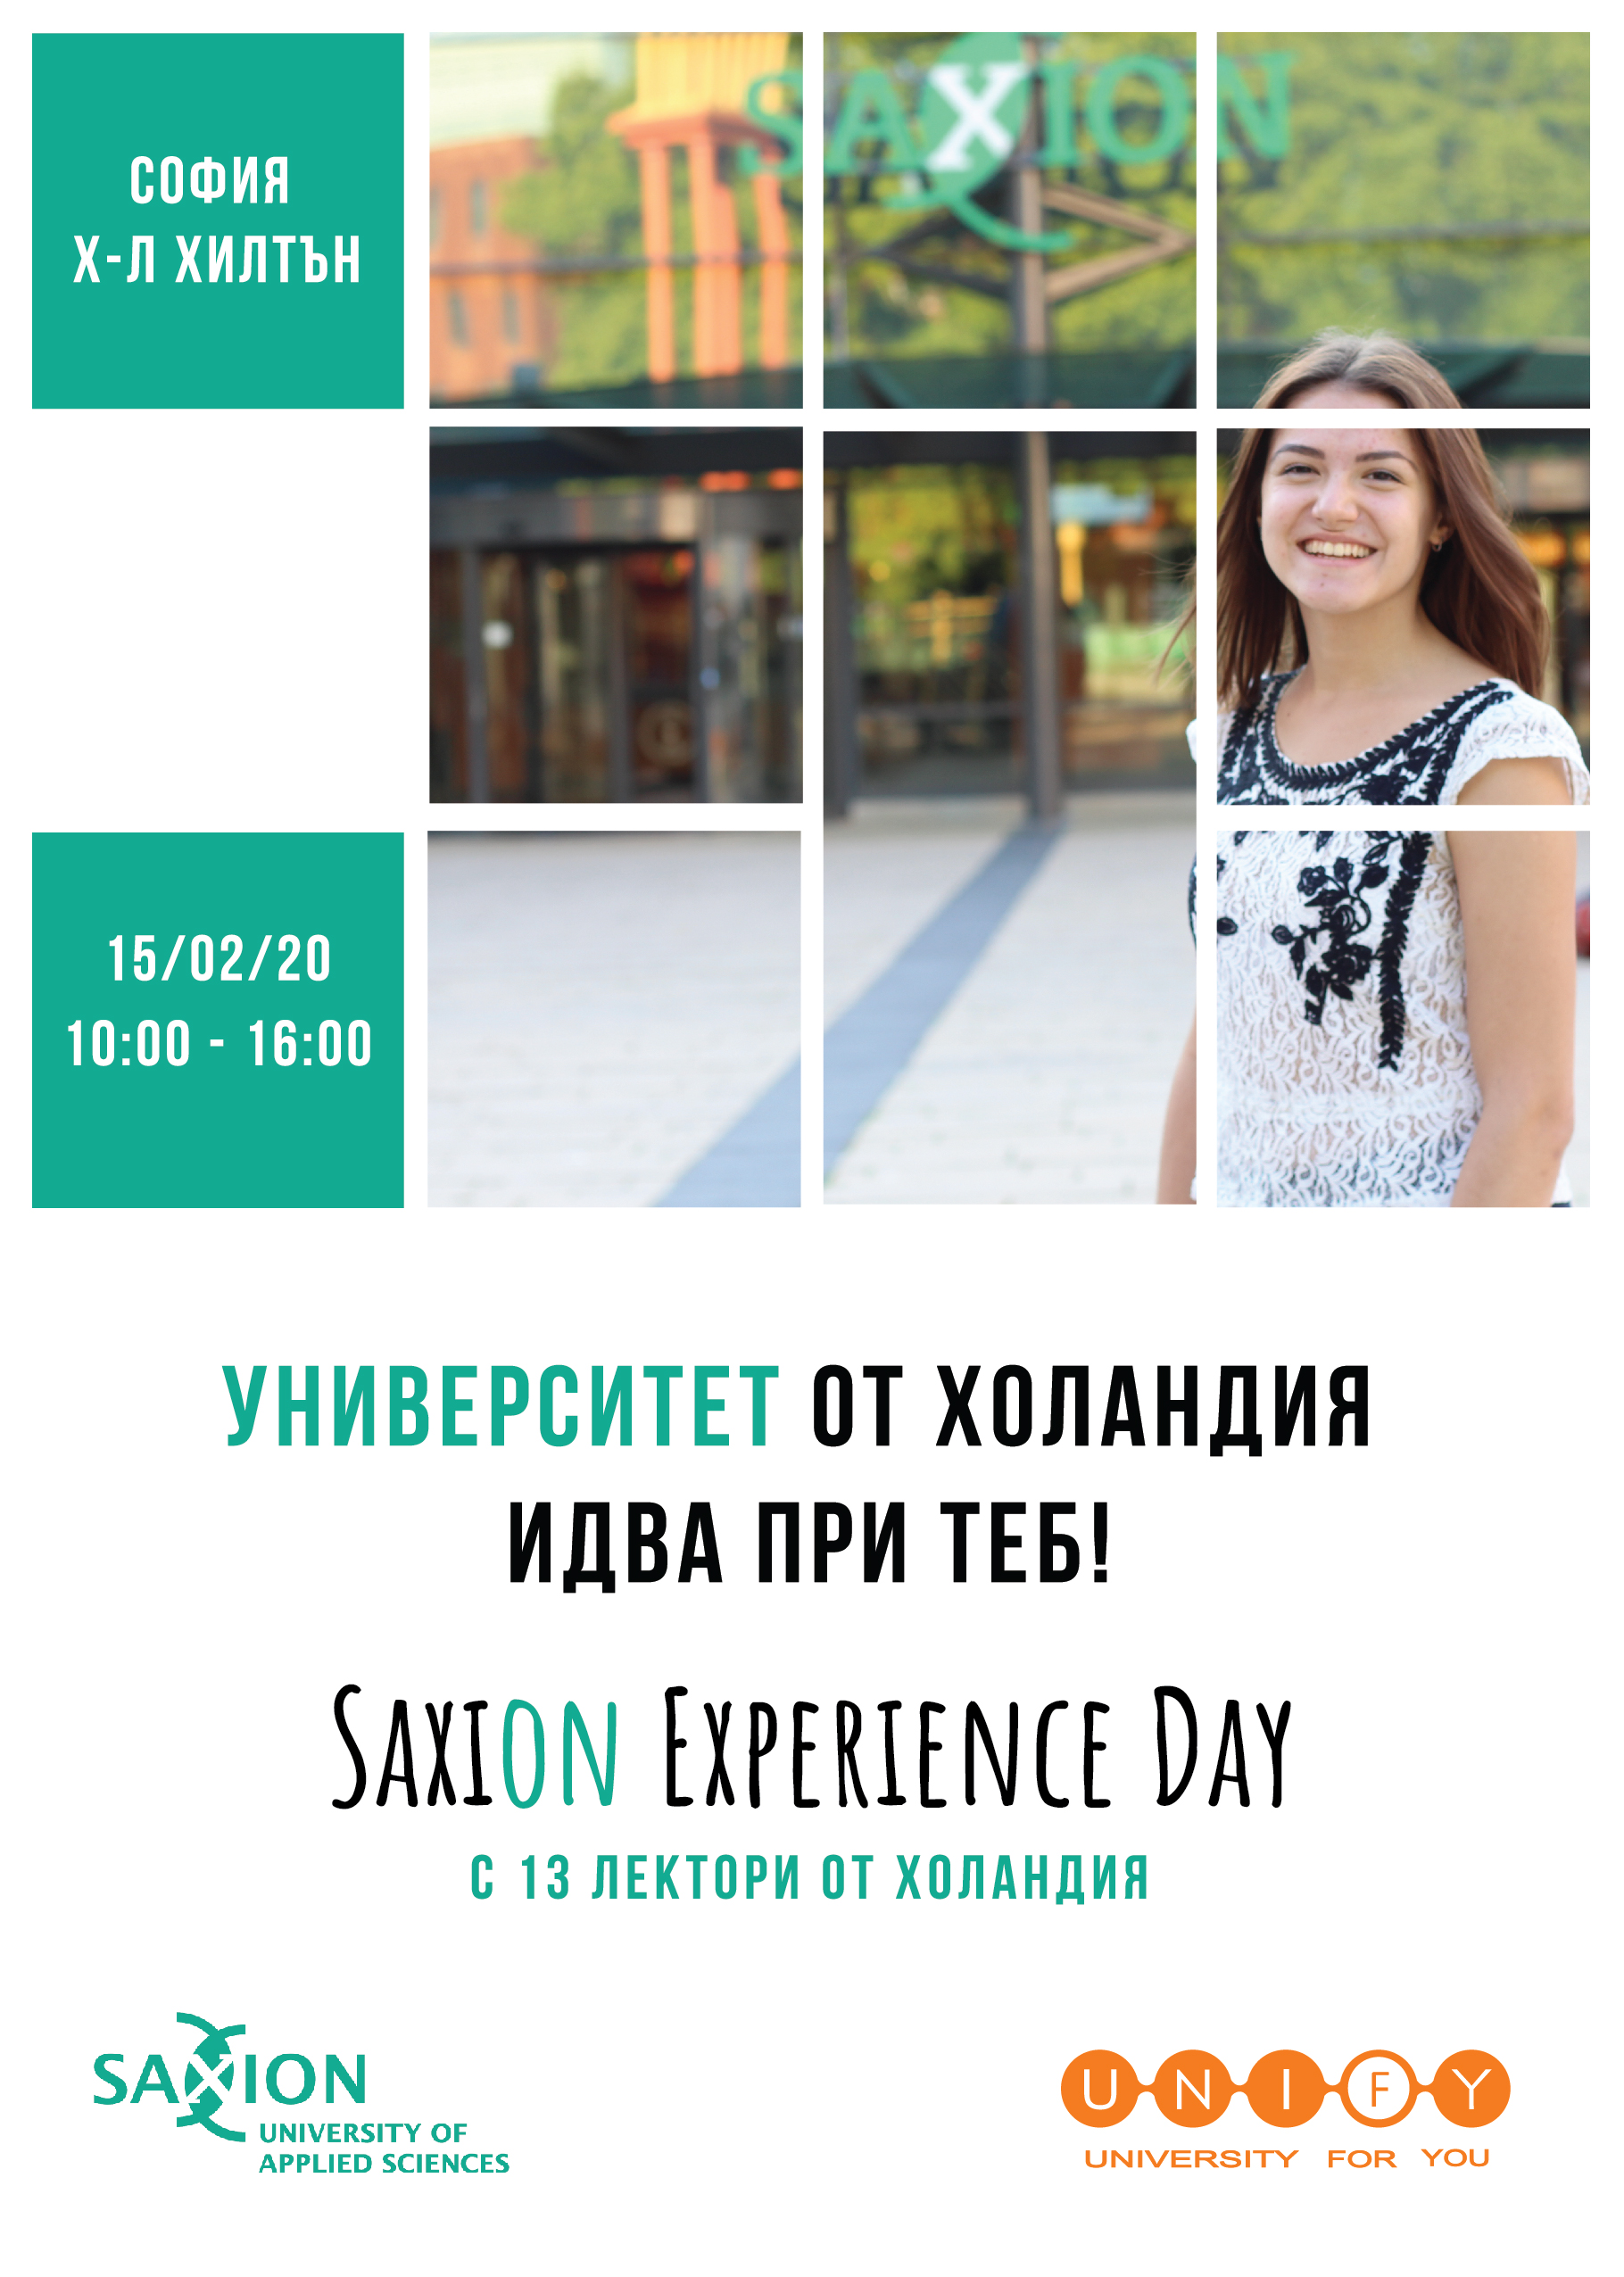 Изживей един ден като студент в Saxion University of Applied Sciences!